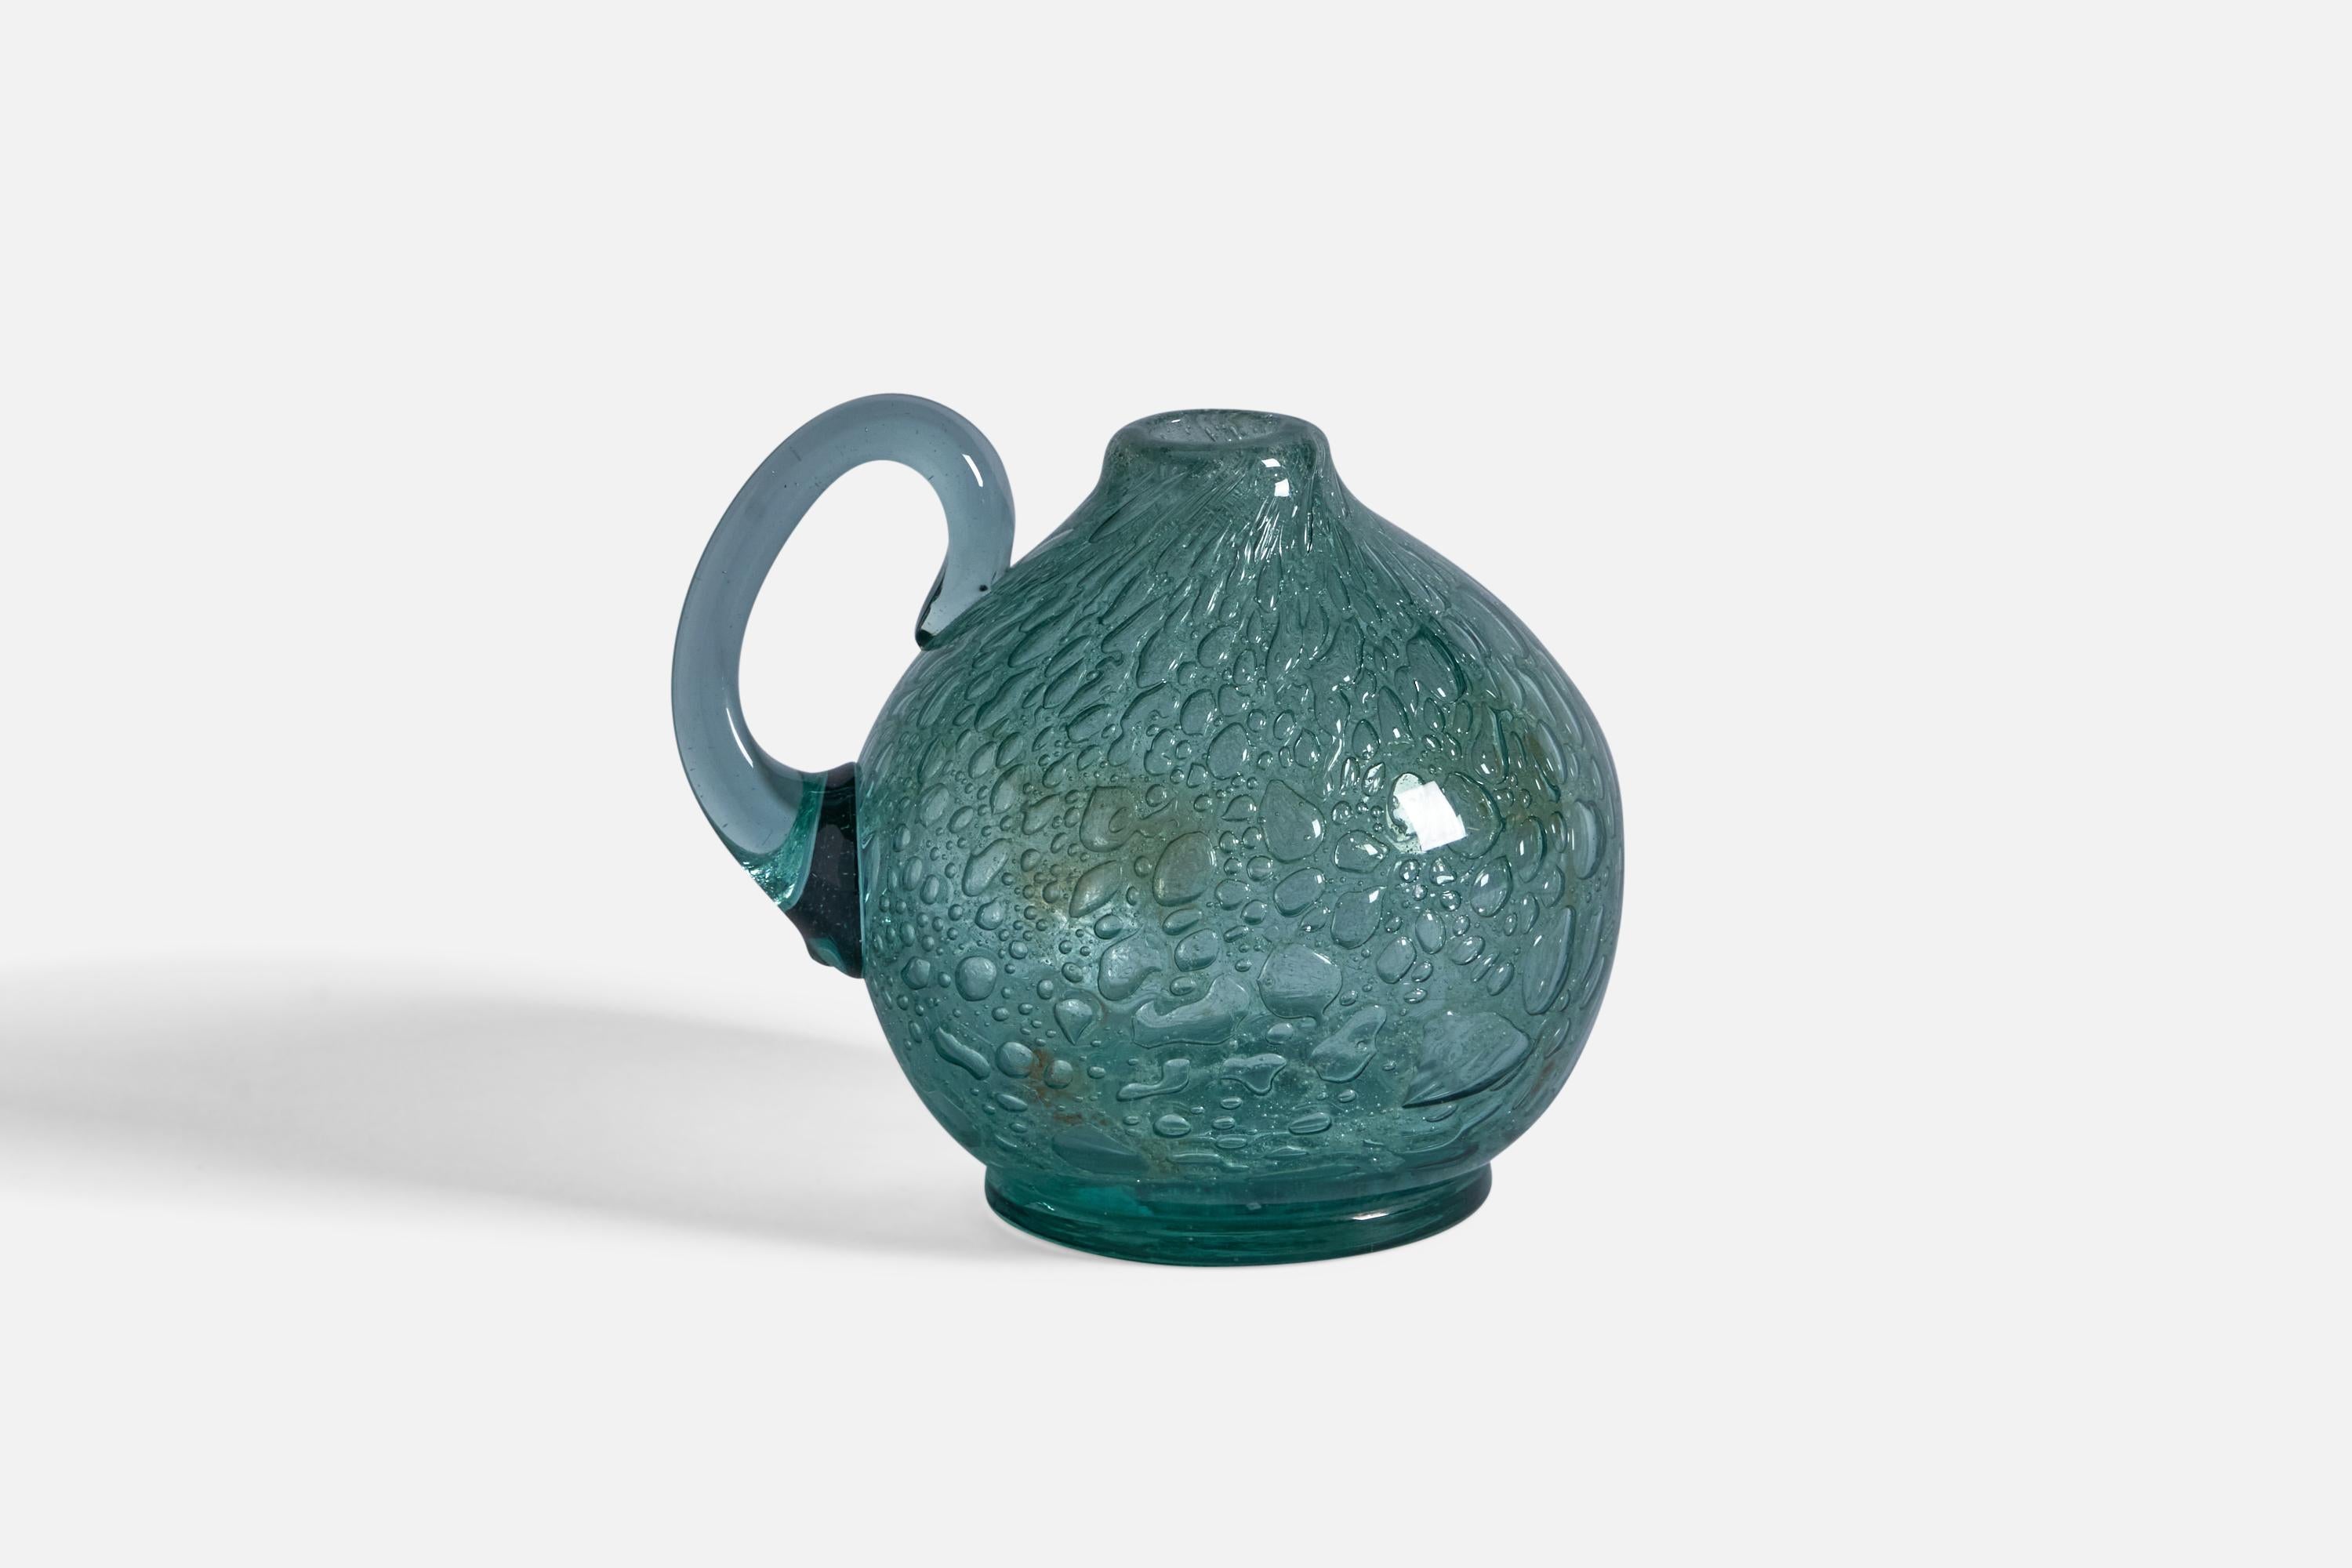 Scandinavian Modern Ture Berglund, Vase, Glass, Sweden, 1940s For Sale